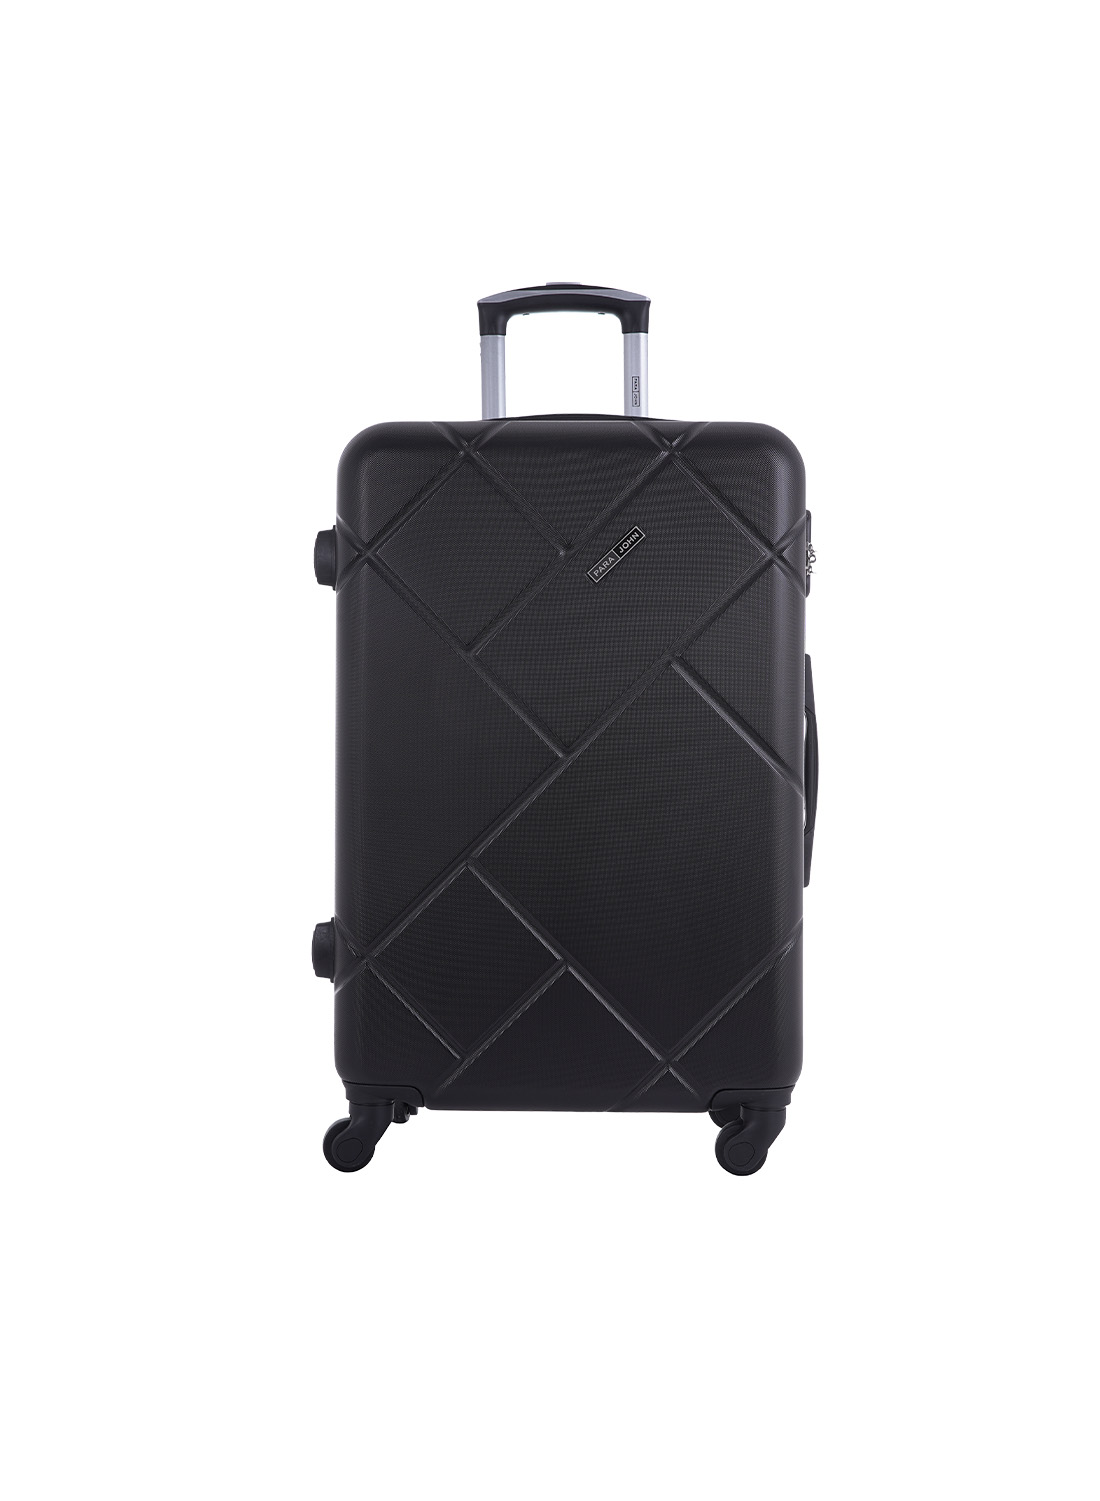 Buy Luggage & Suitcase Online